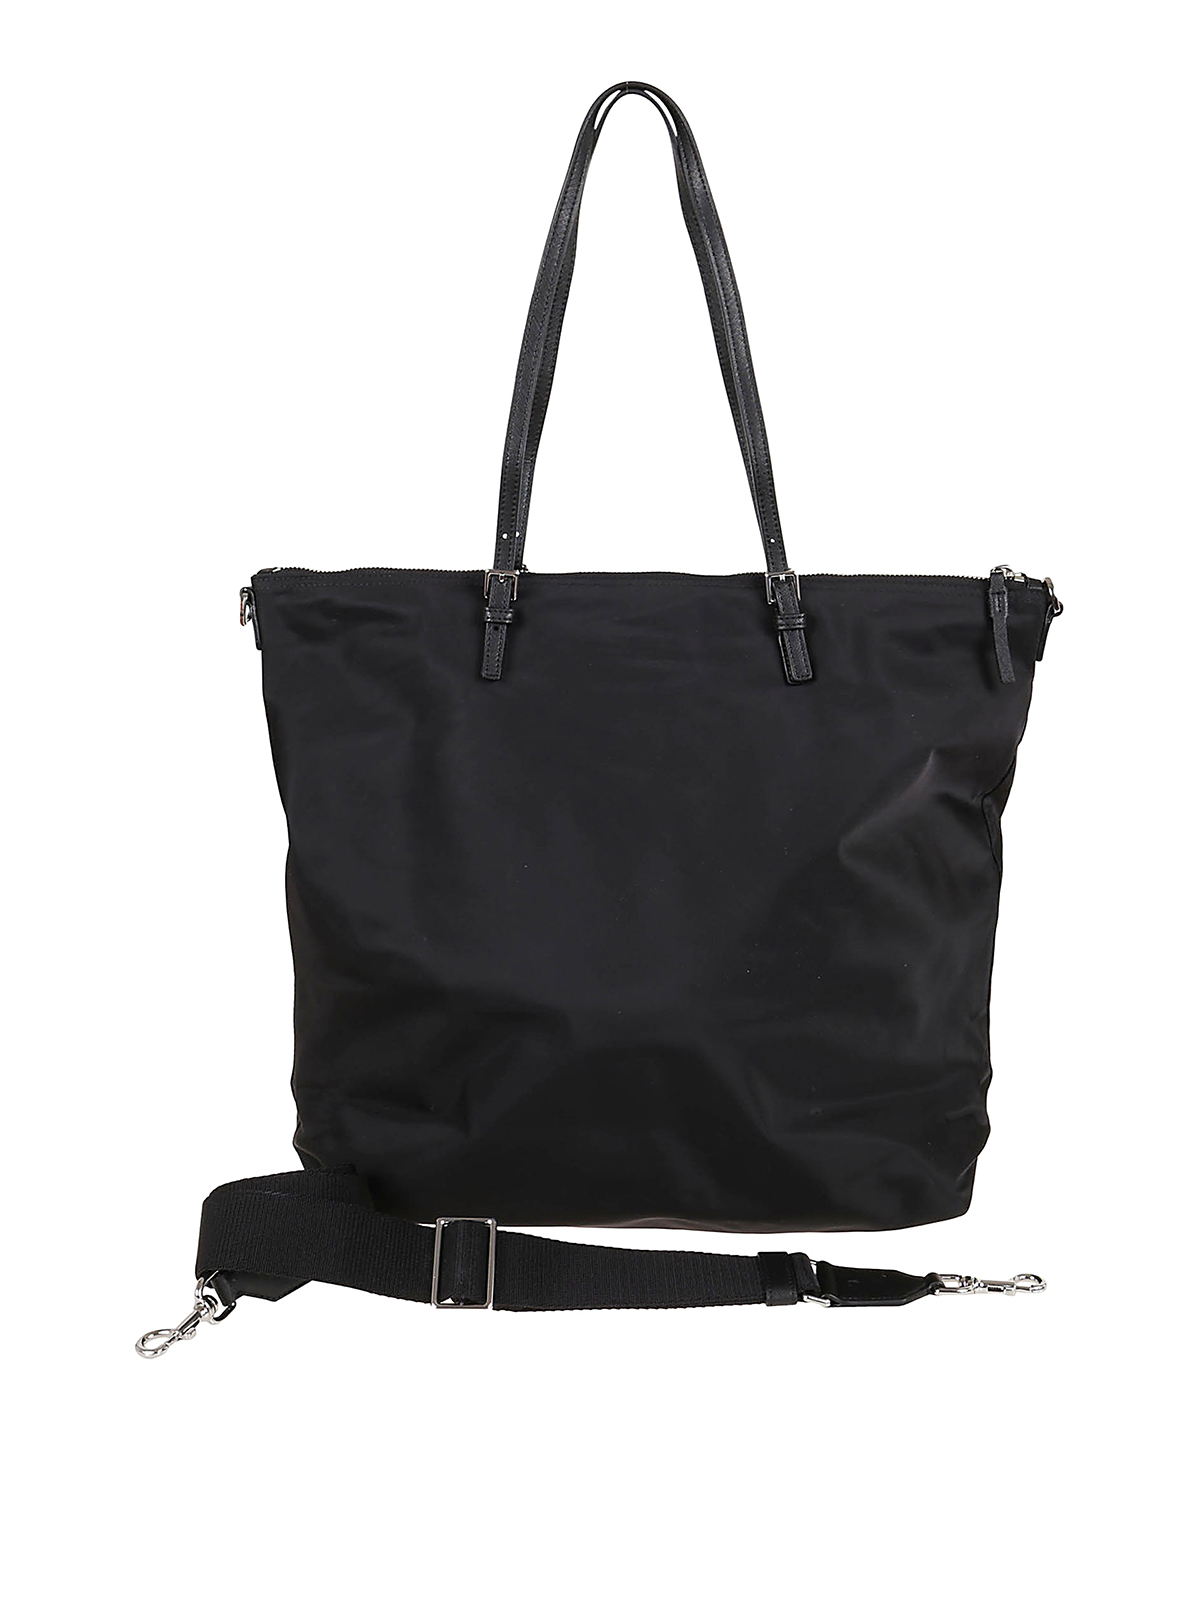 Totes bags Tory Burch - Nylon tote bag - 85063001 | Shop online at iKRIX